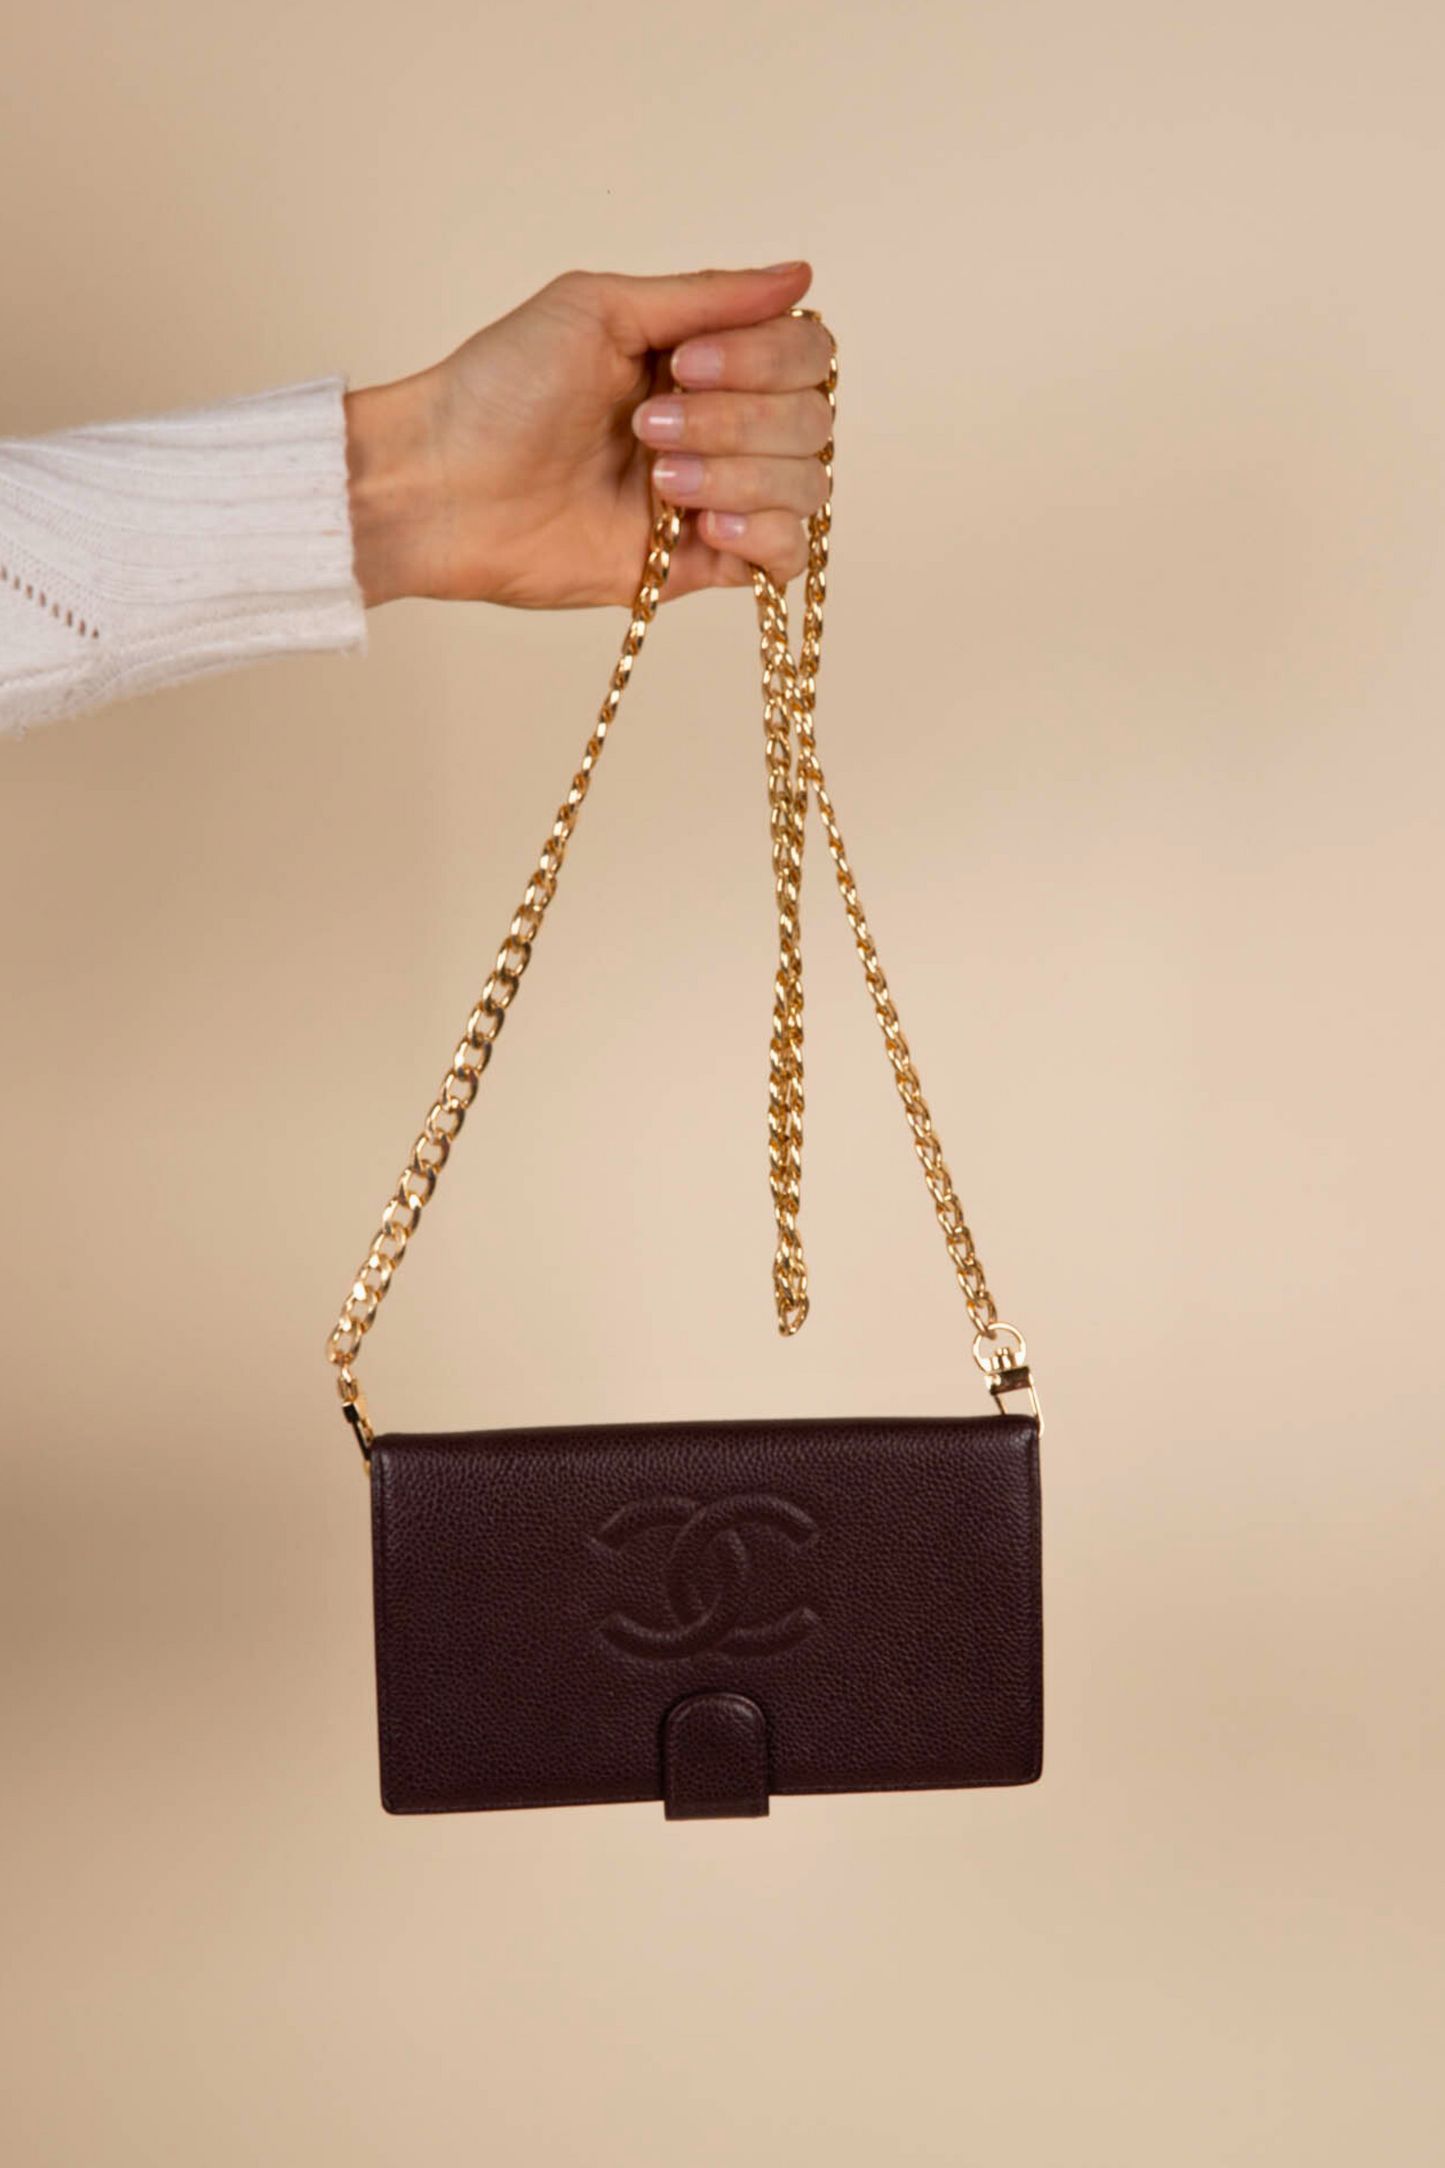 Chanel Metallic Bronze Caviar Leather Sevruga Wallet on Chain